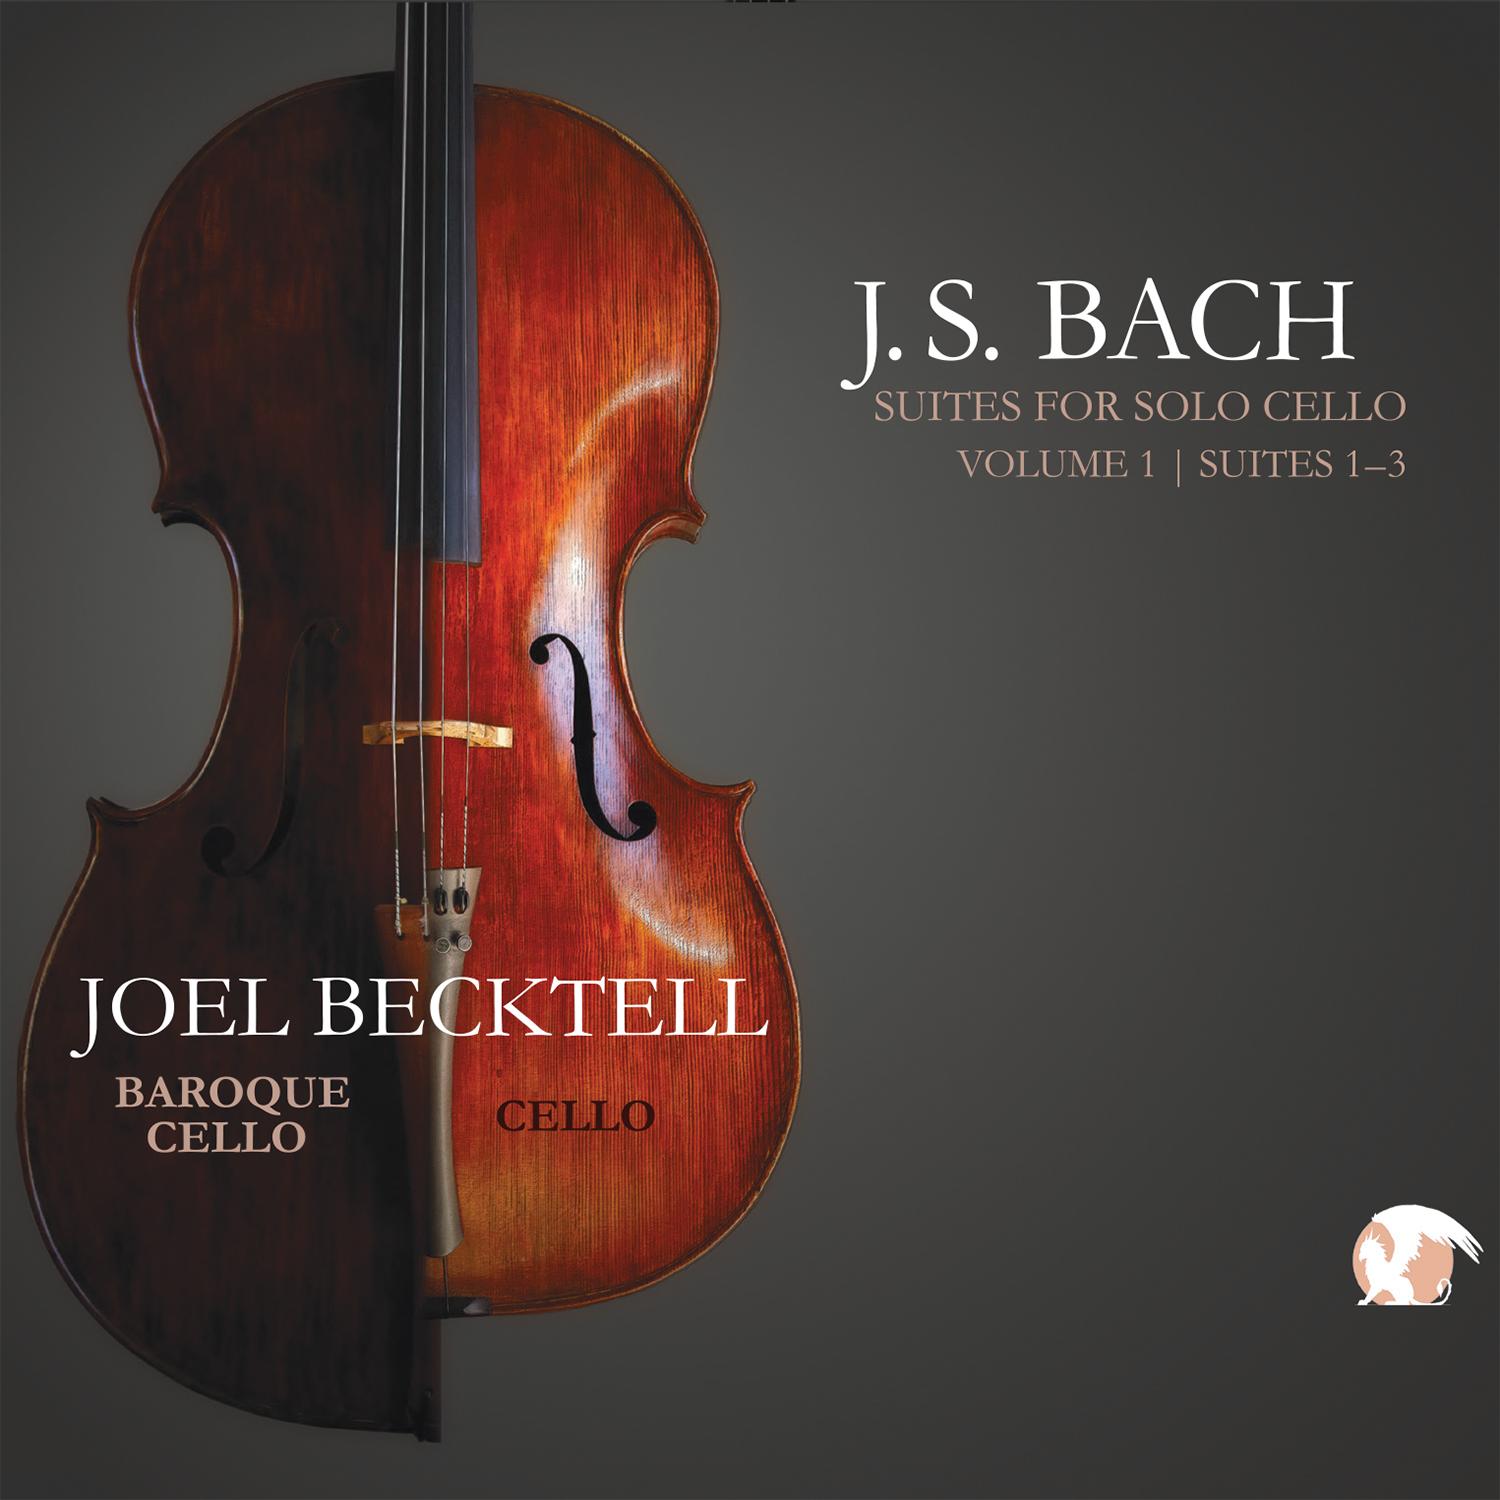 Suite No. 3 in C Major for Solo Cello, BWV 1009: Boure es I  II